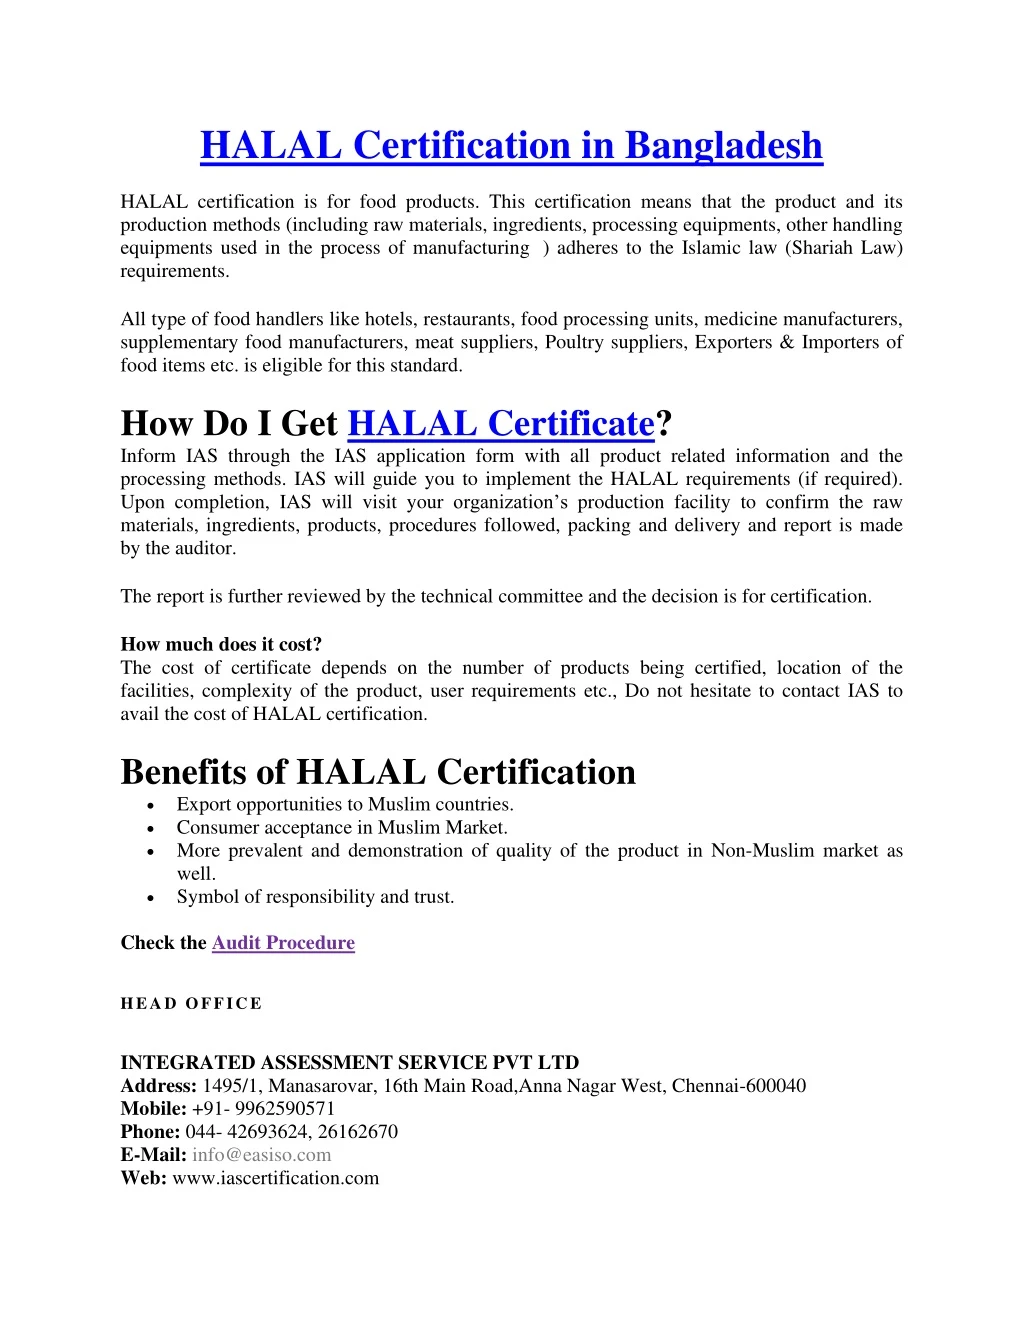 halal certification in bangladesh